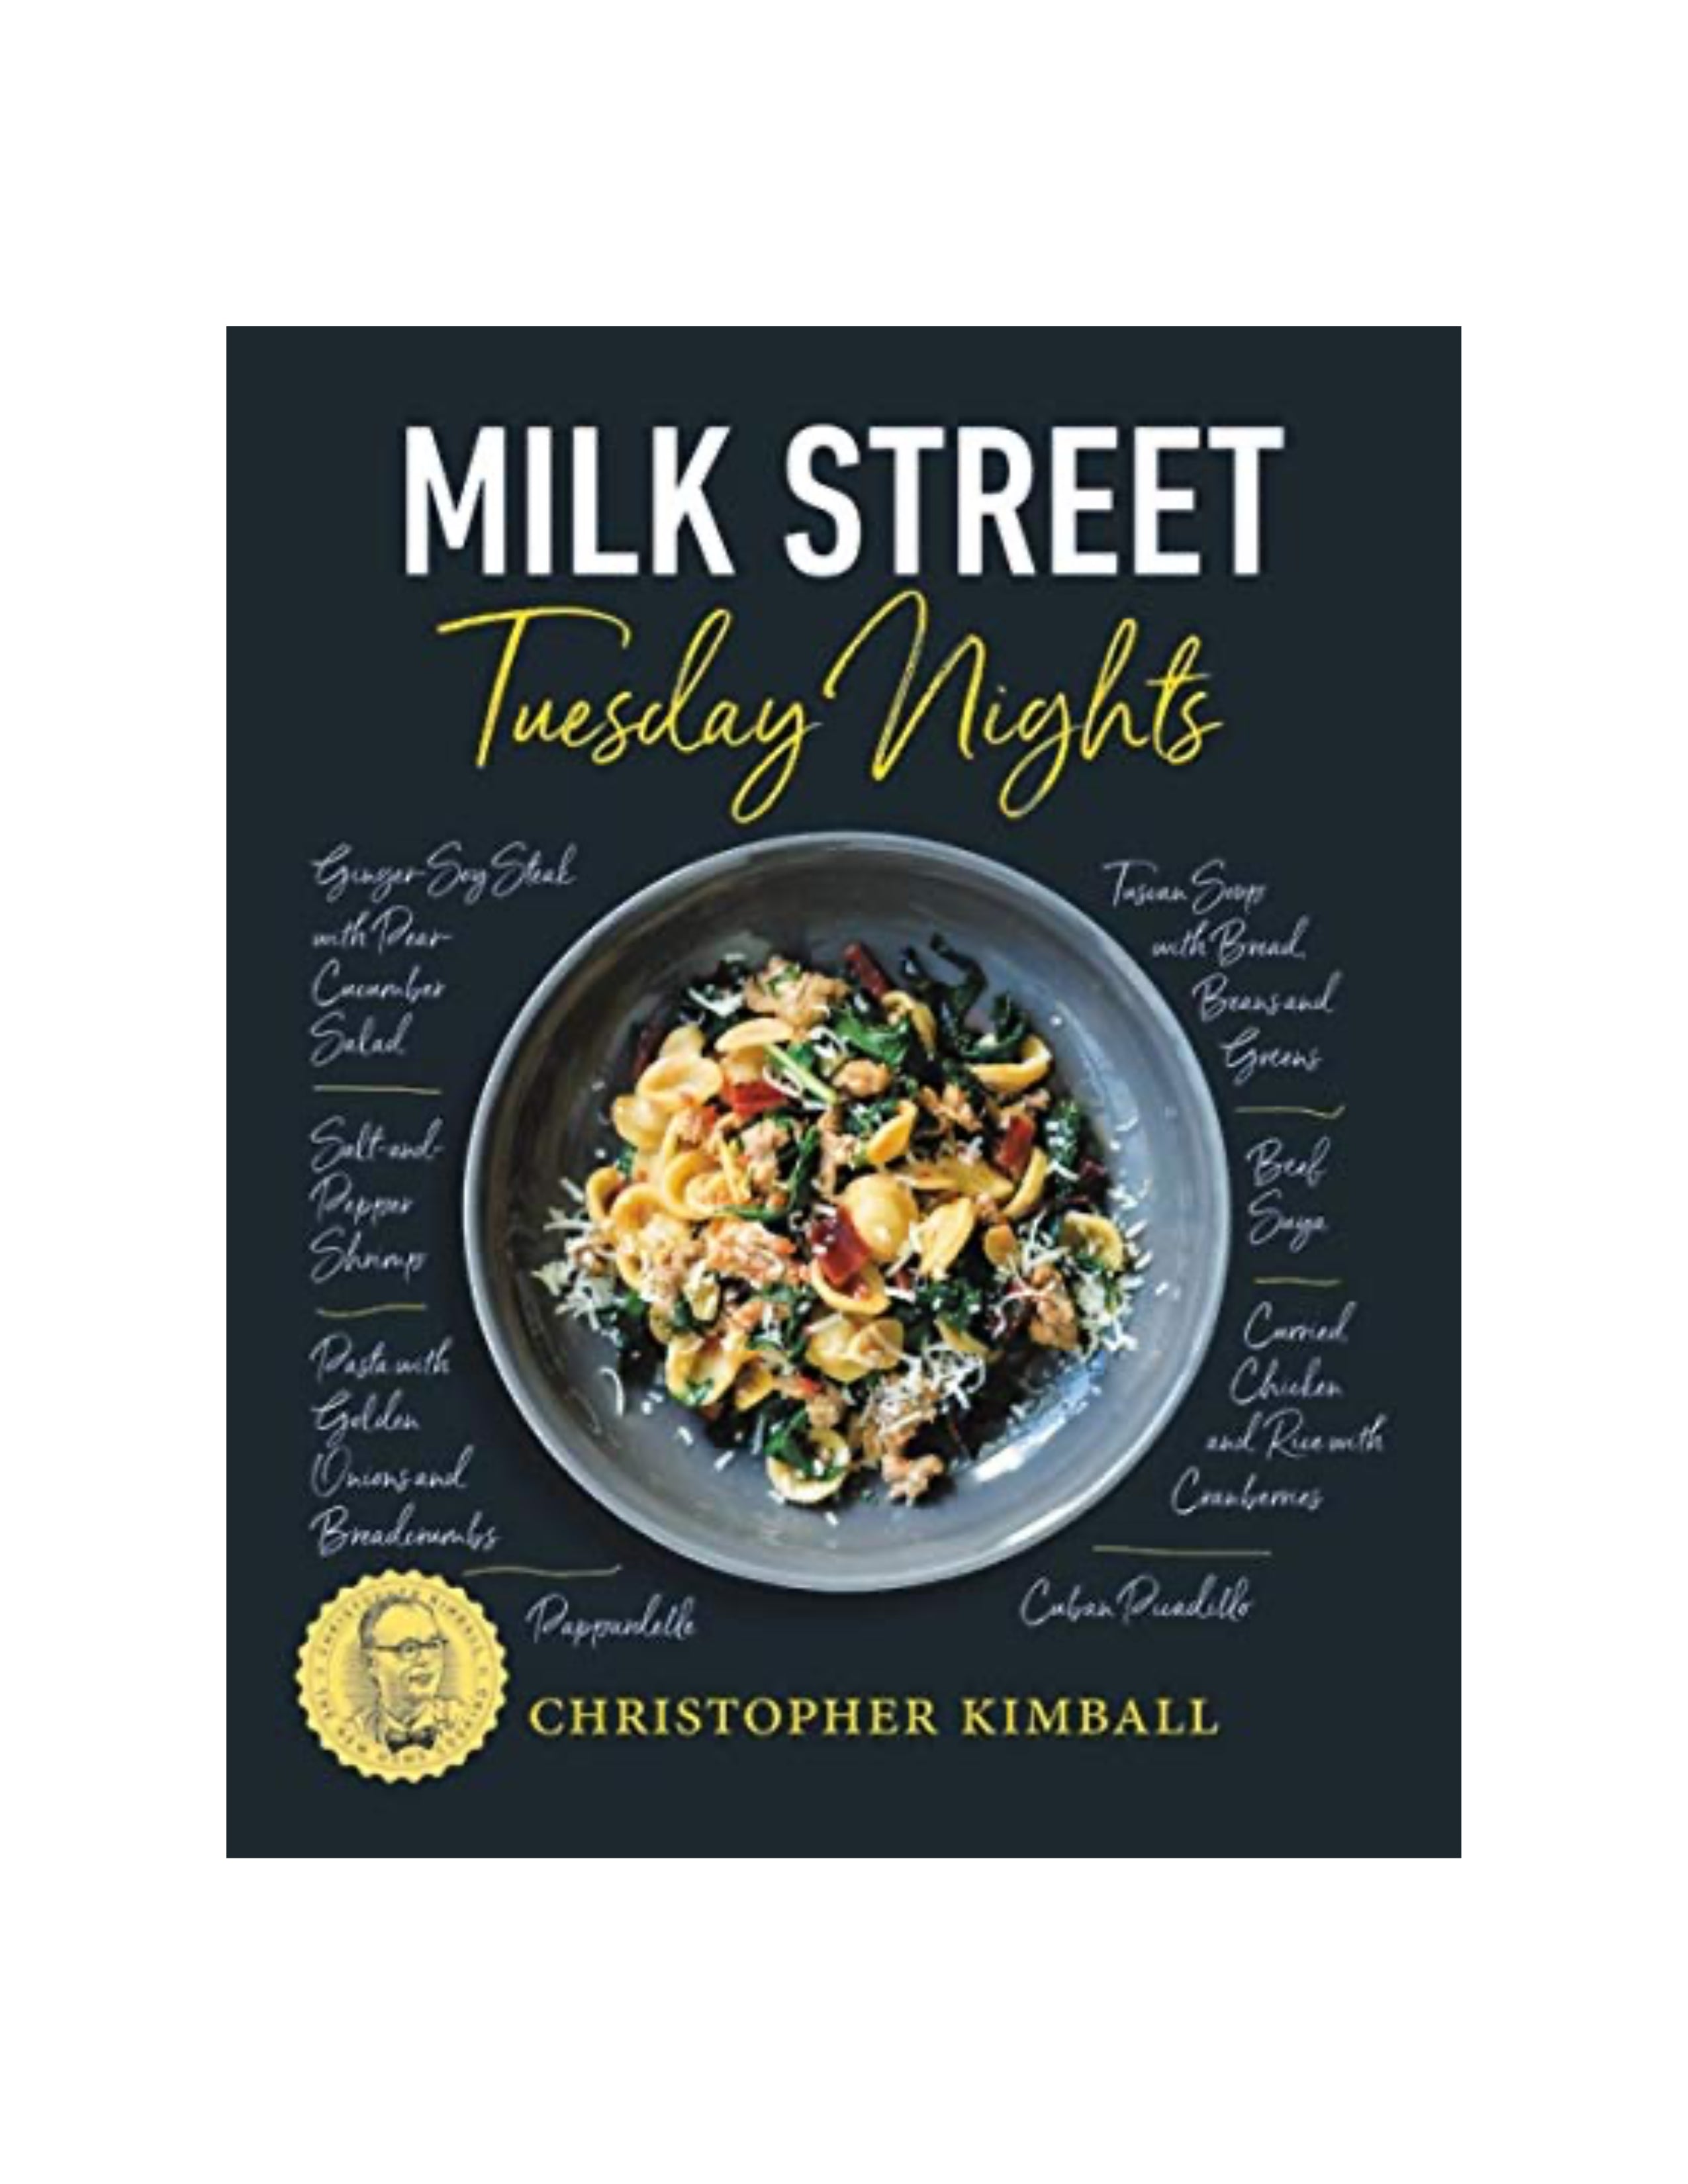 Milk Street Tuesday Night's